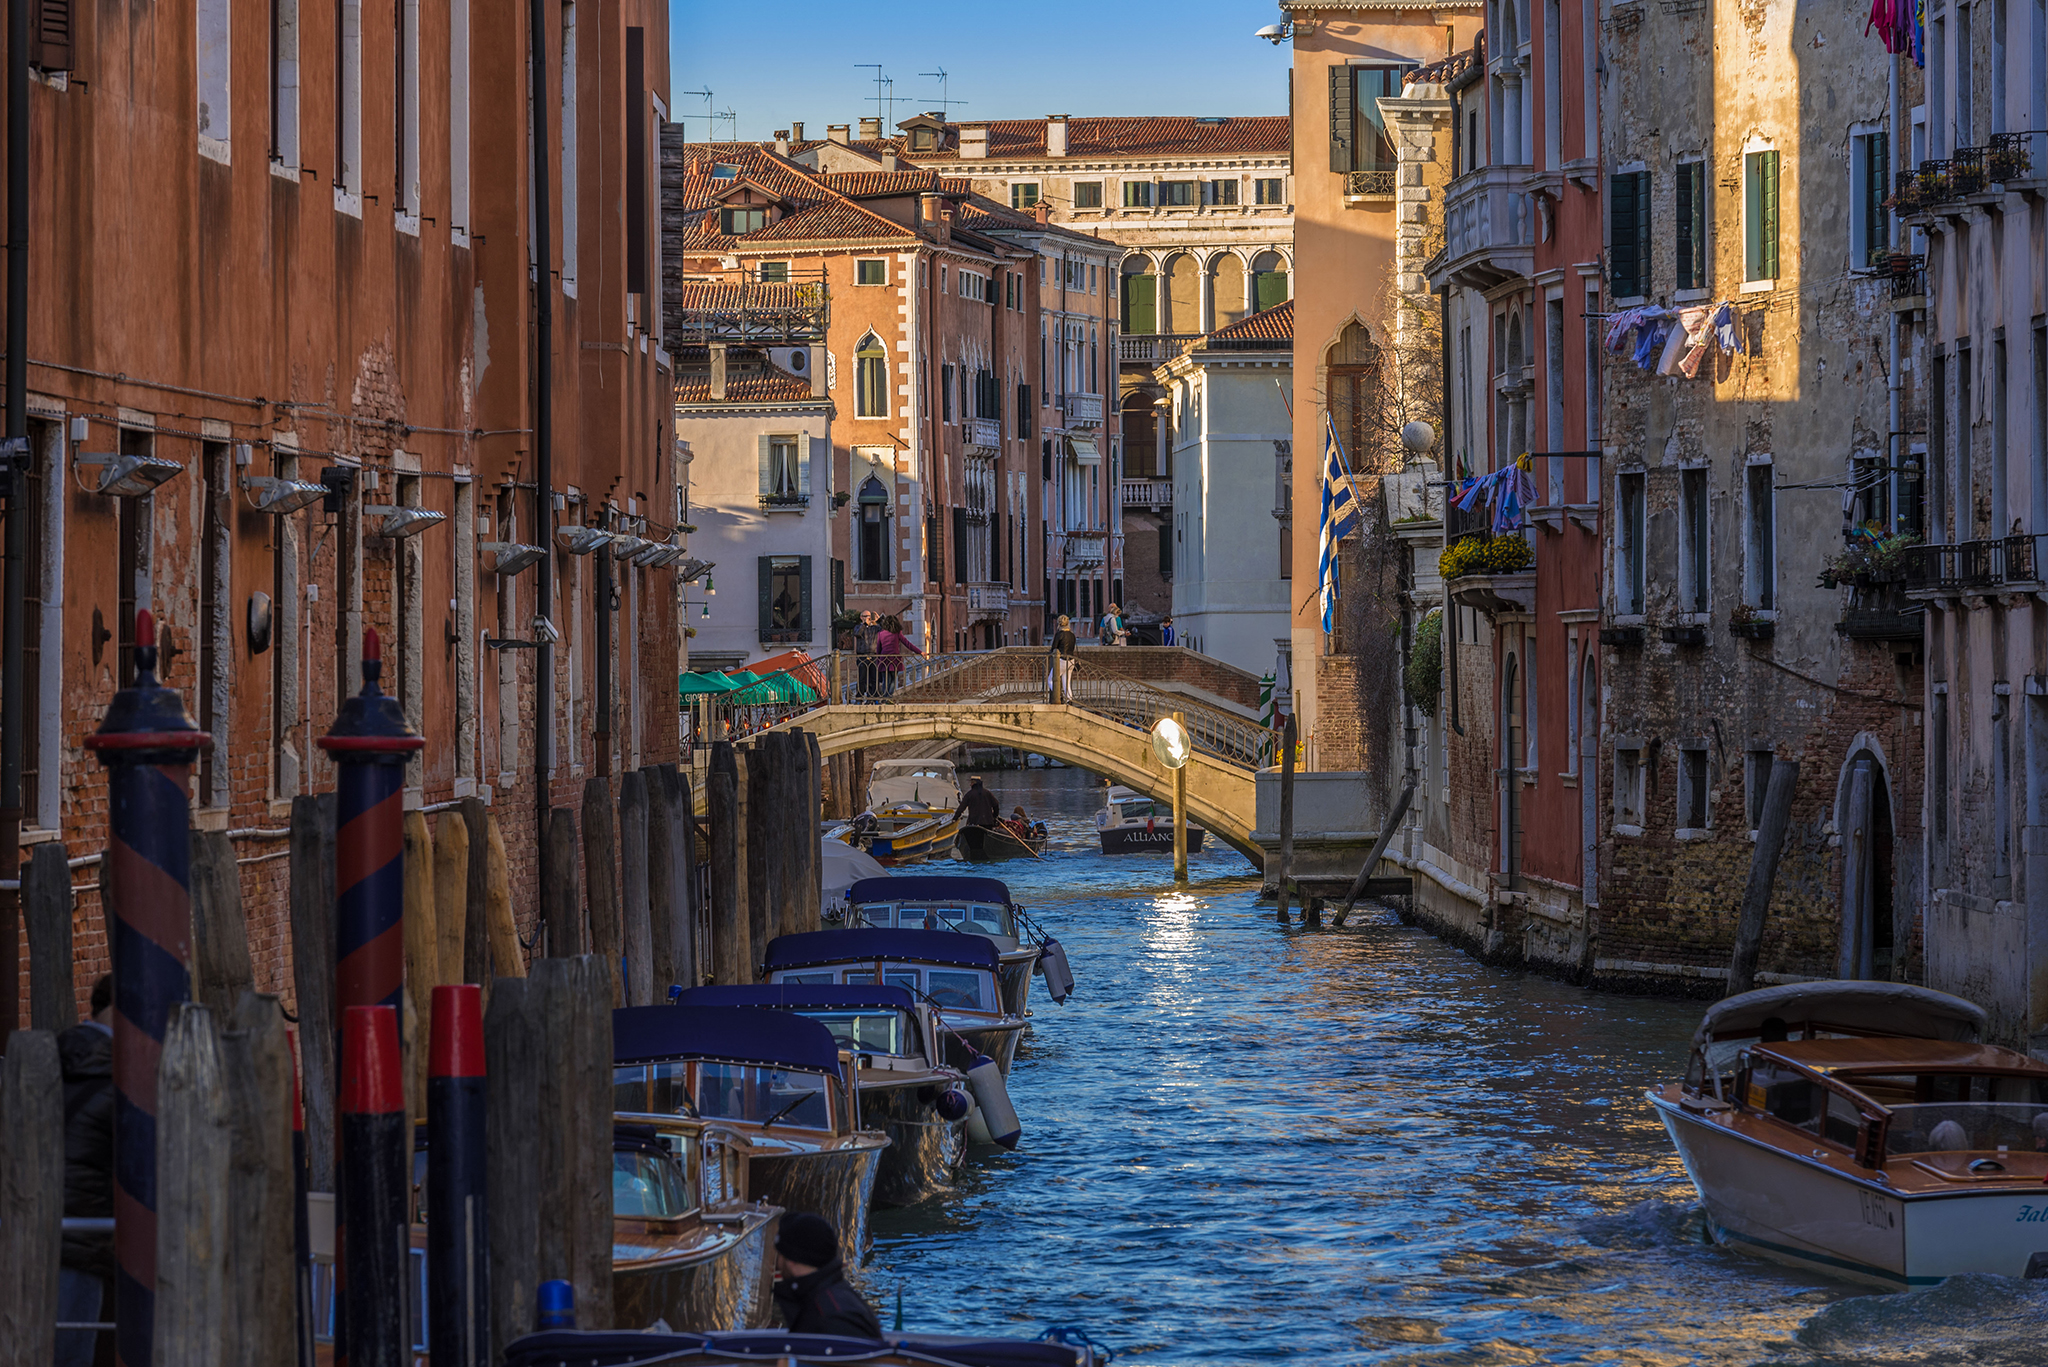 The City Of Love - Venice